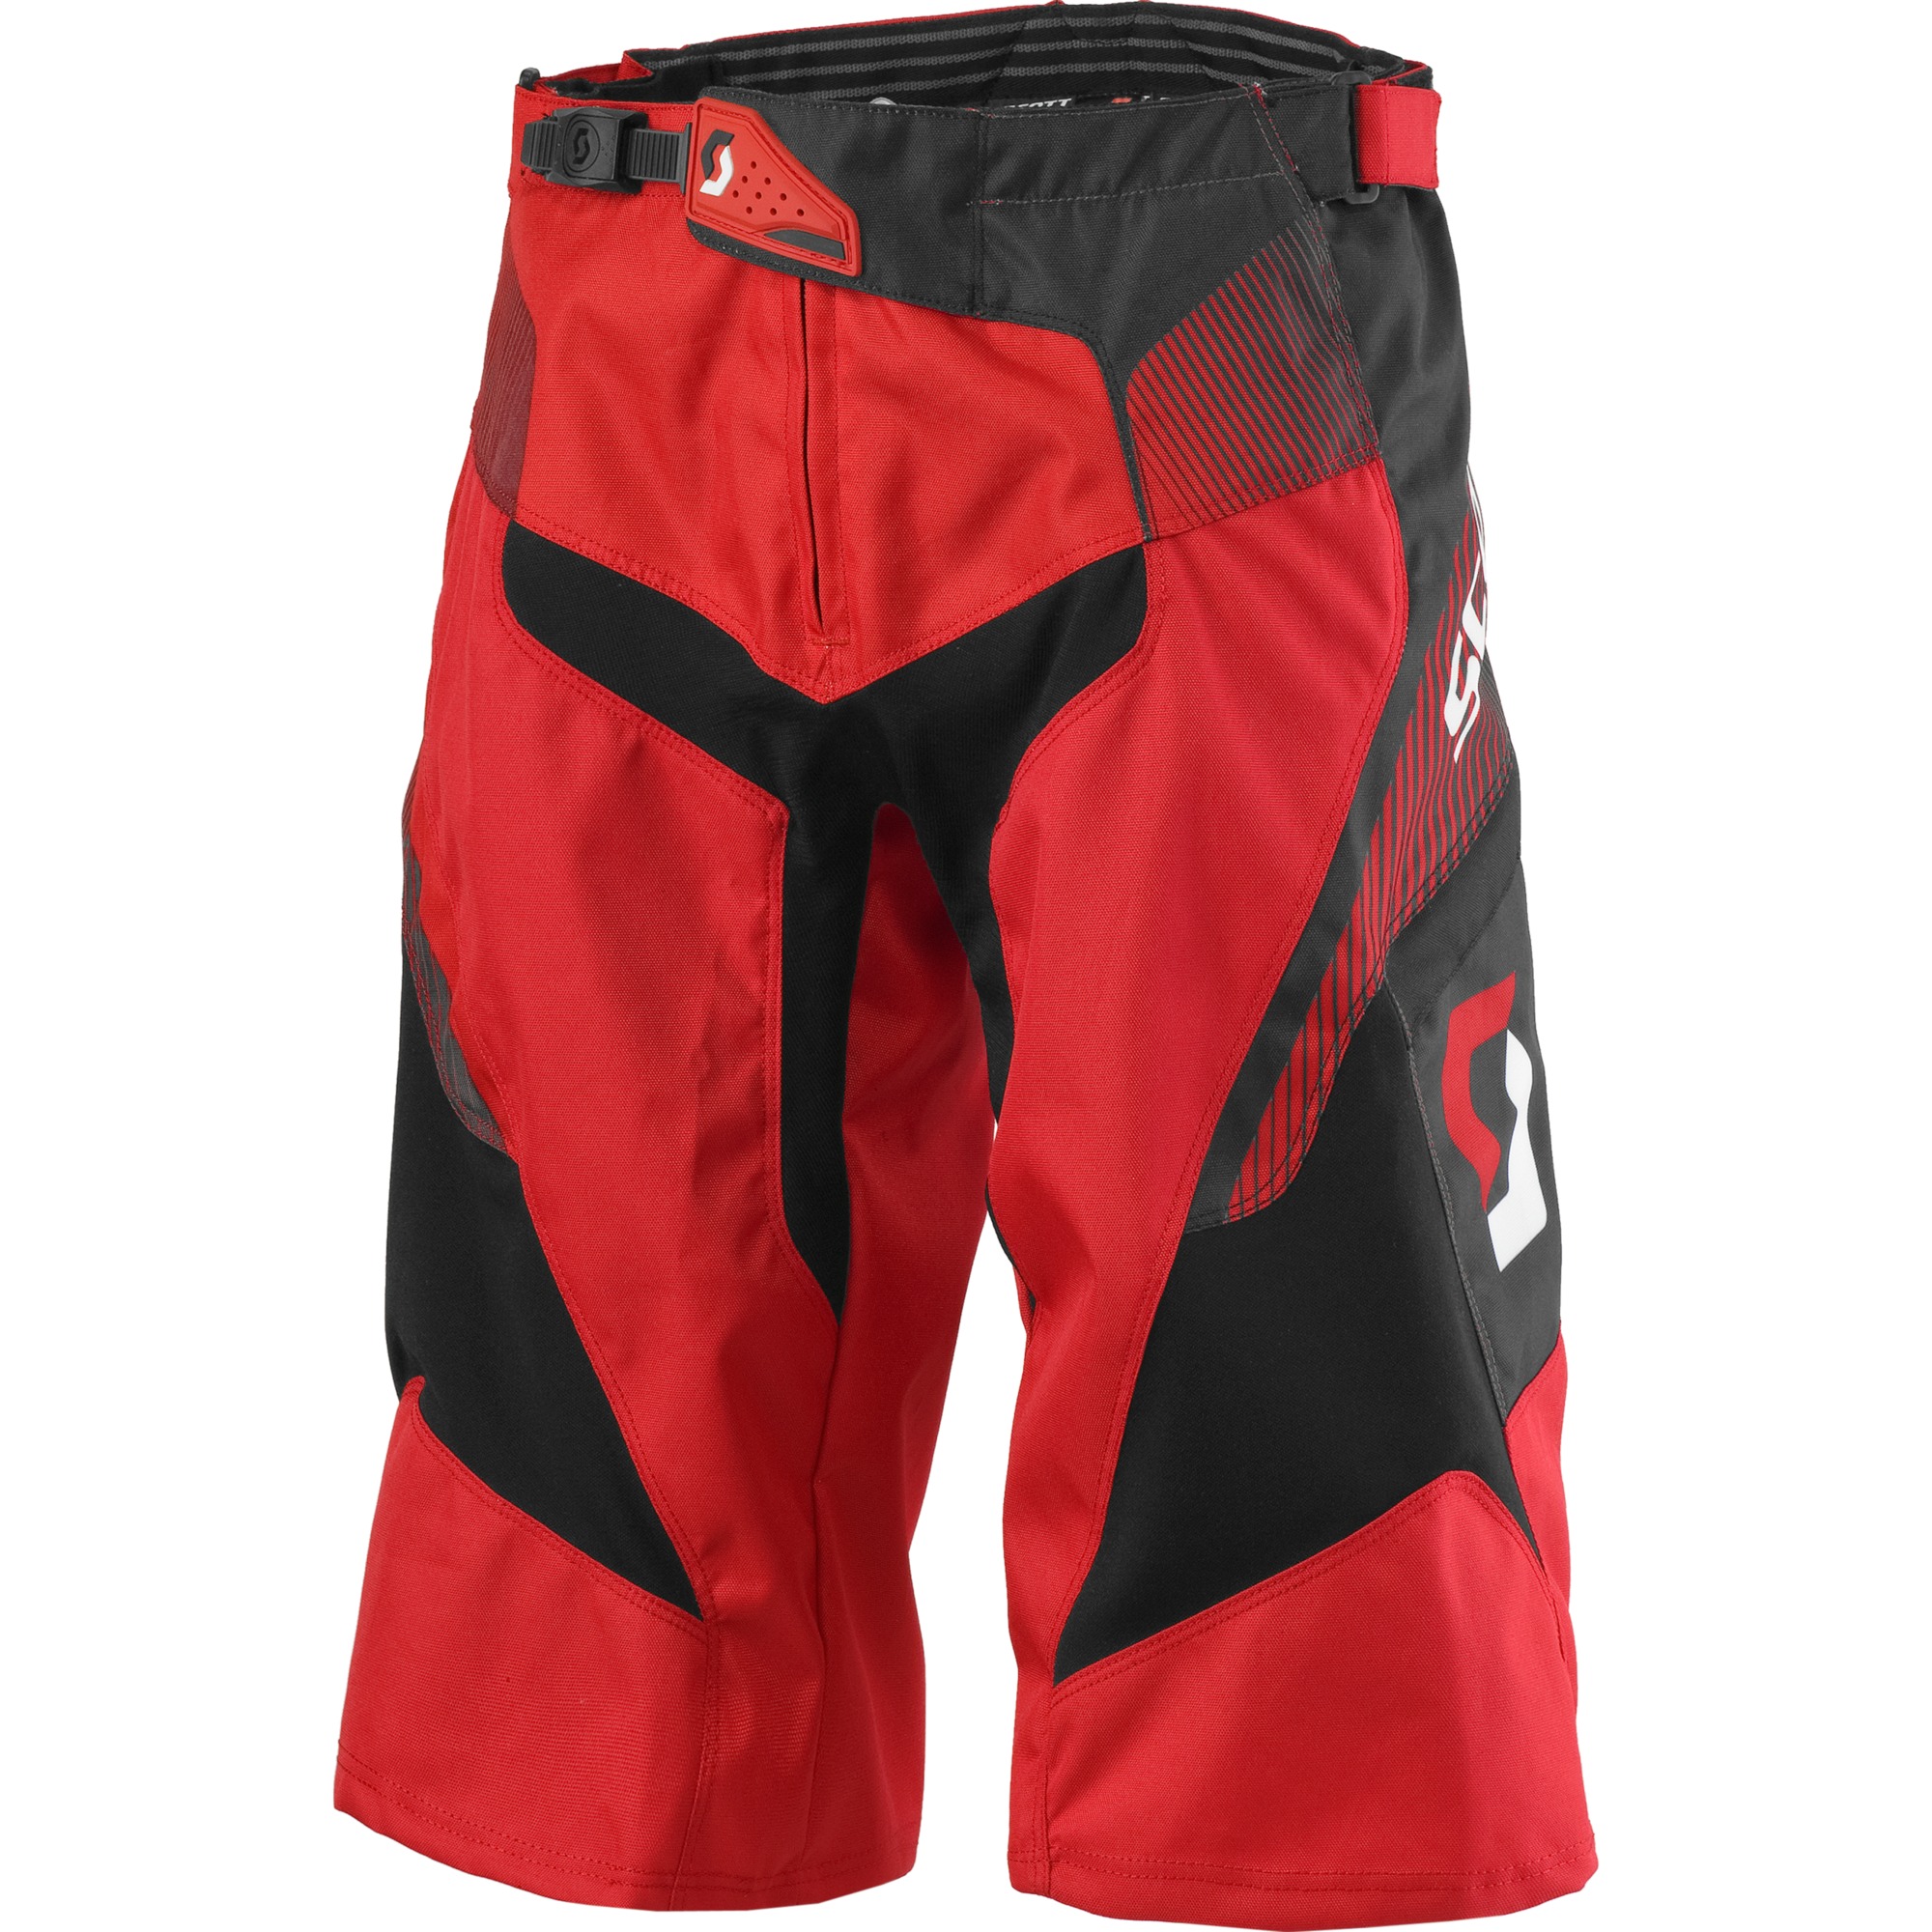 Scott DH Racing Bike Downhill Shorts Pants Short Red 2012 | eBay